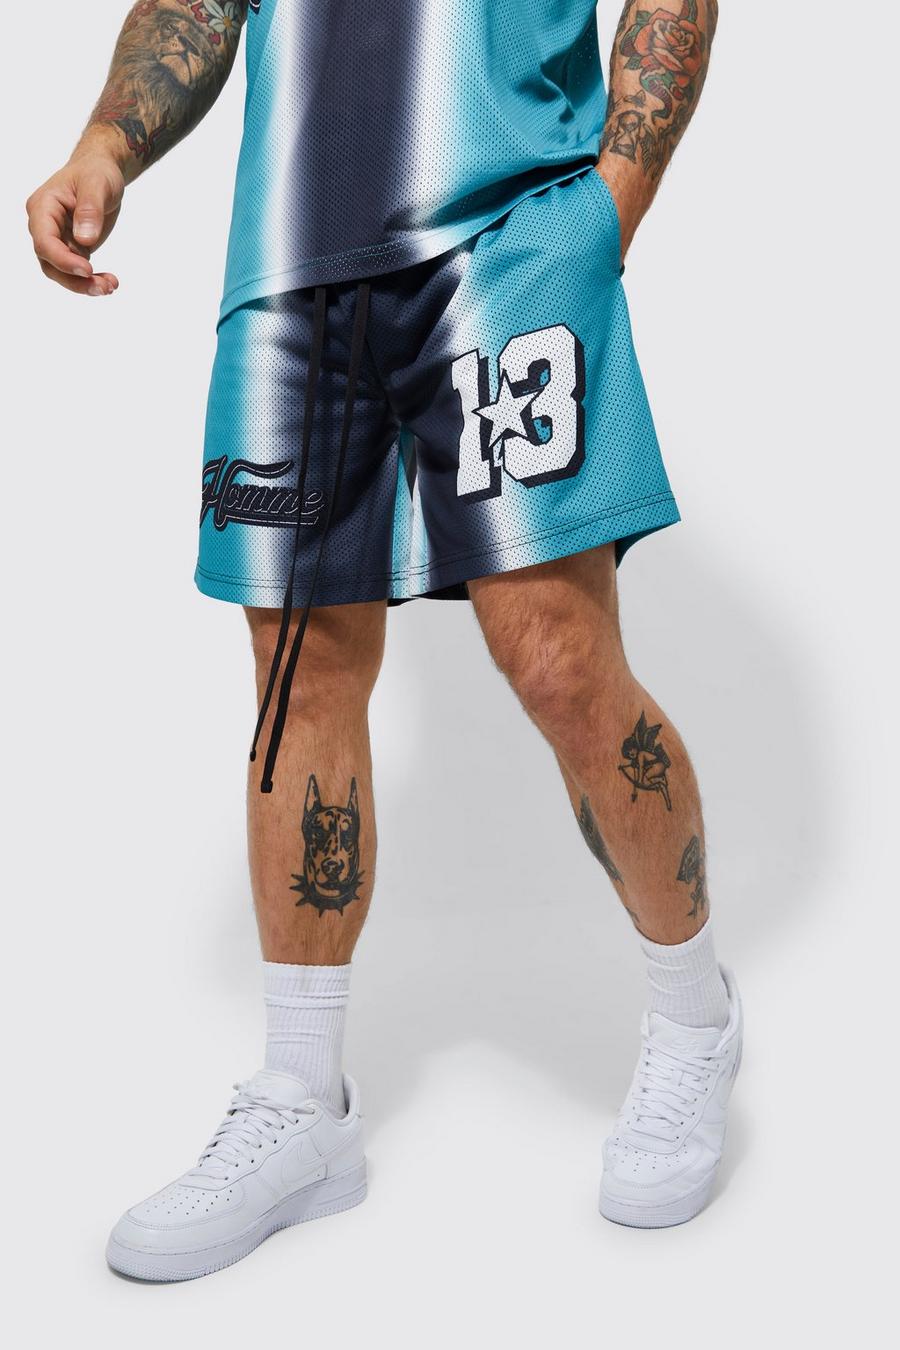 Mesh Basketball-Shorts mit Homme Farbverlauf-Print, Teal green